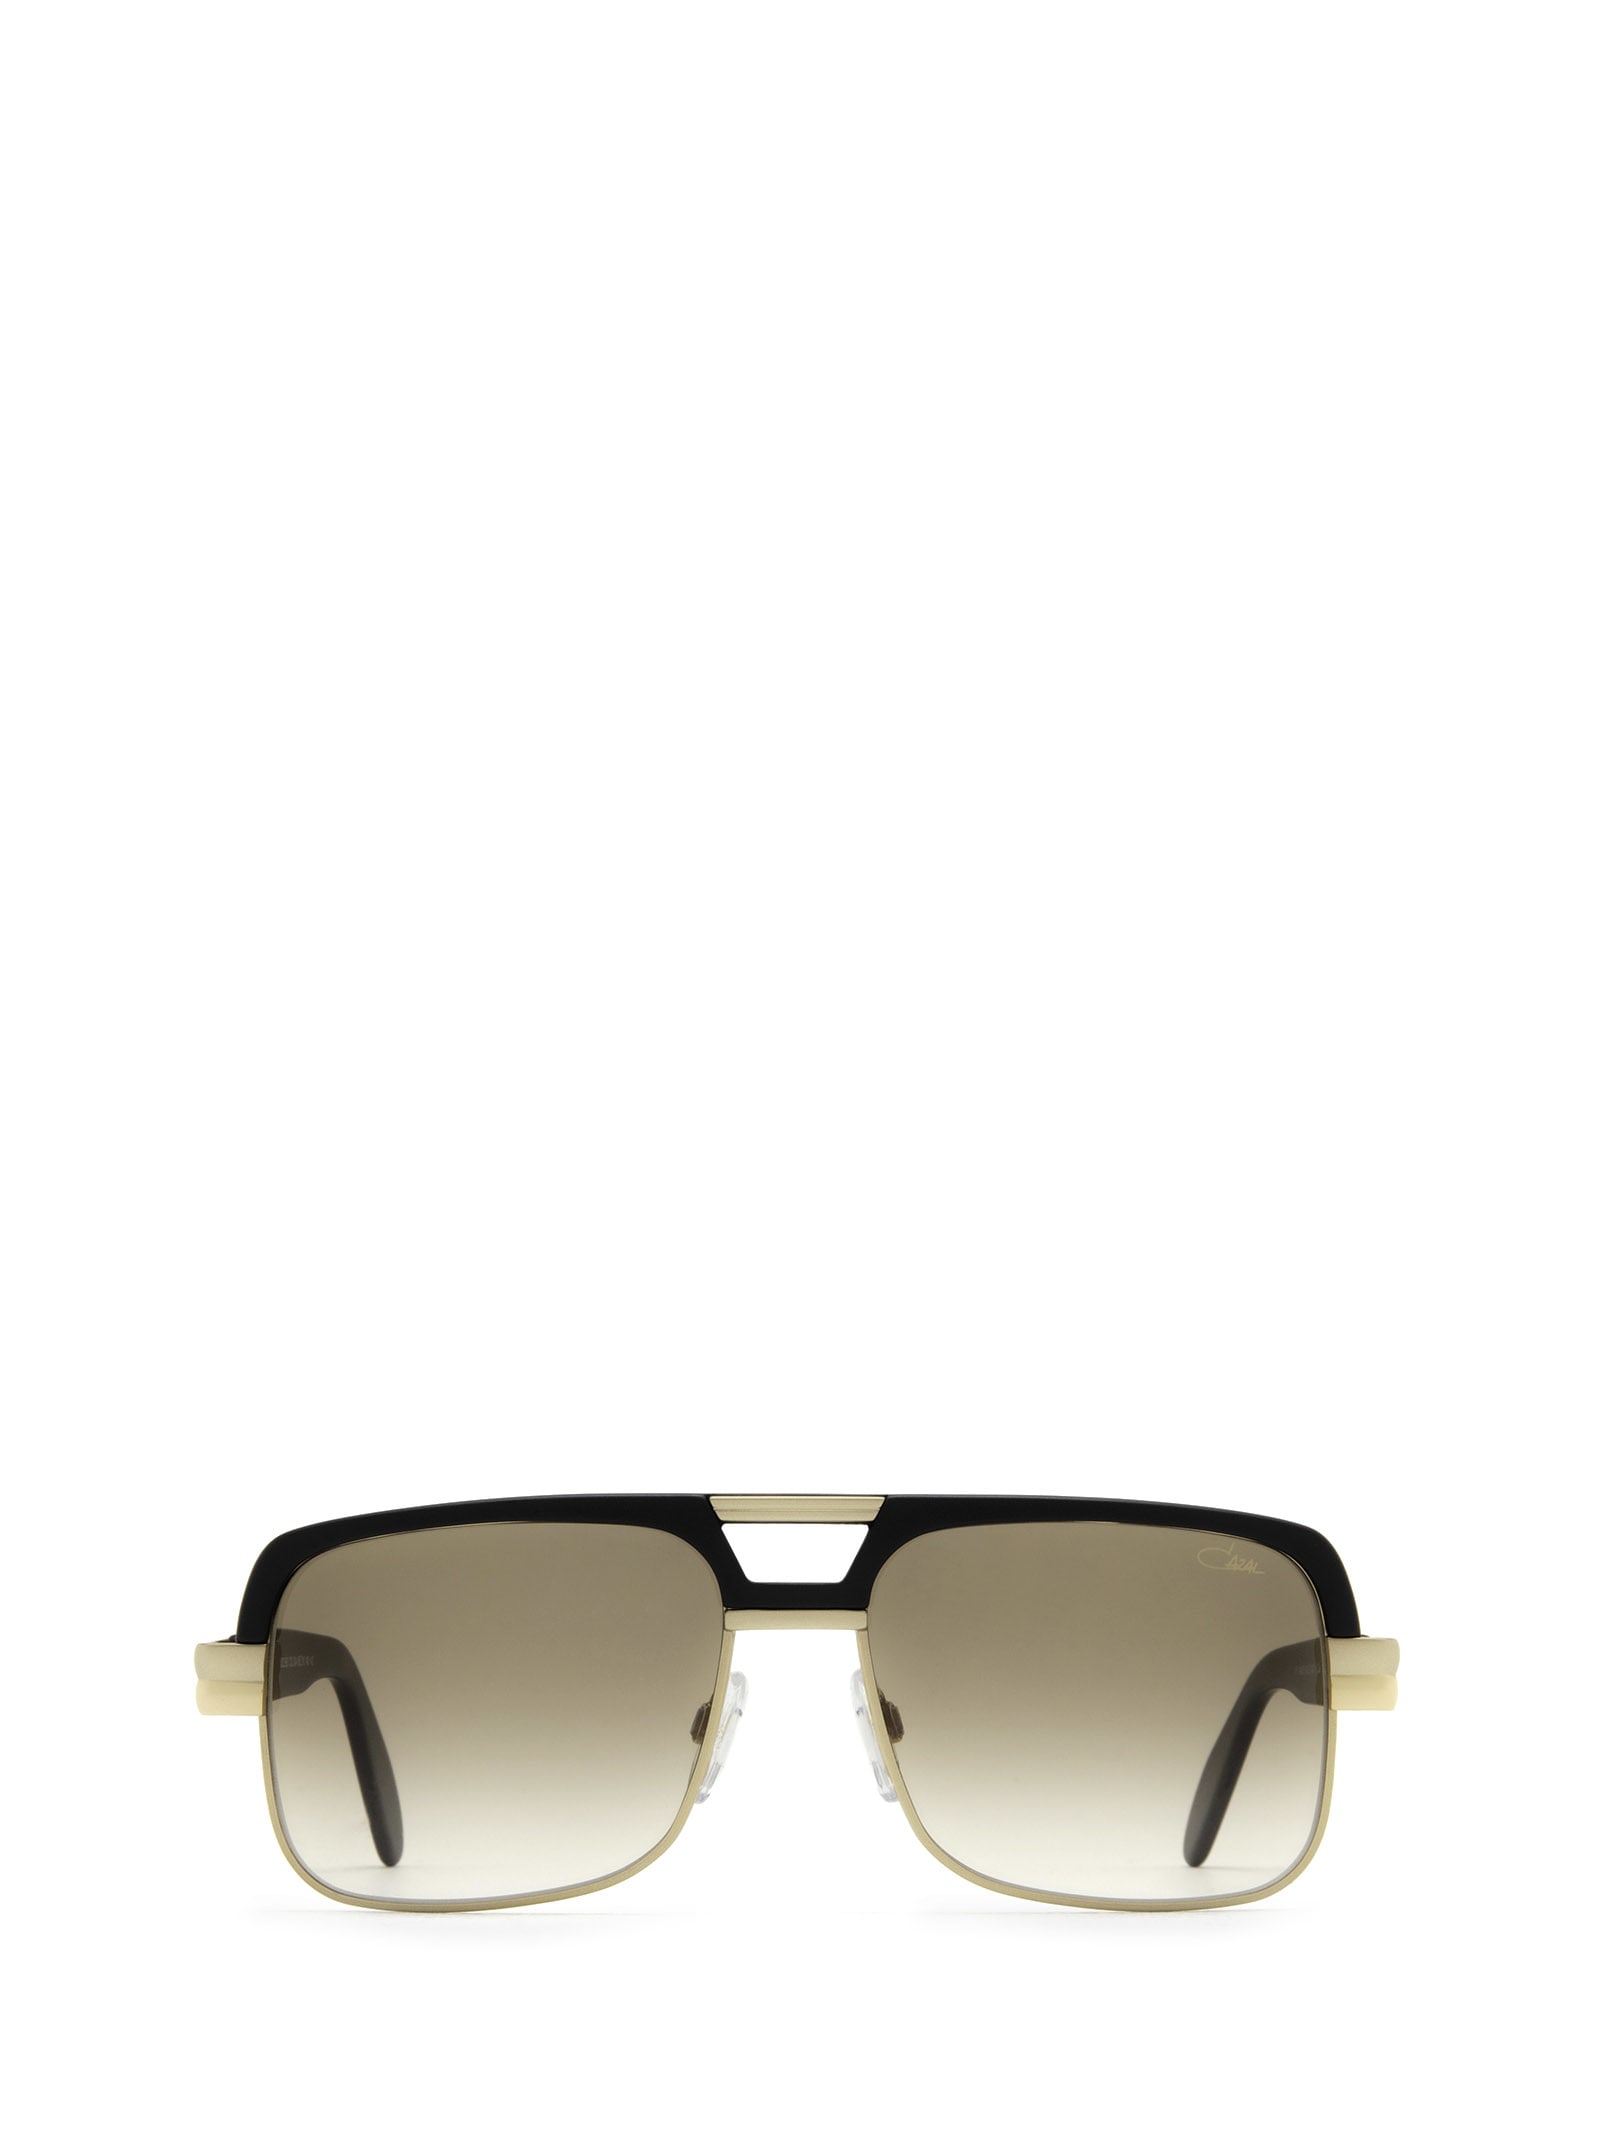 Cazal 993 Black - Gold Sunglasses